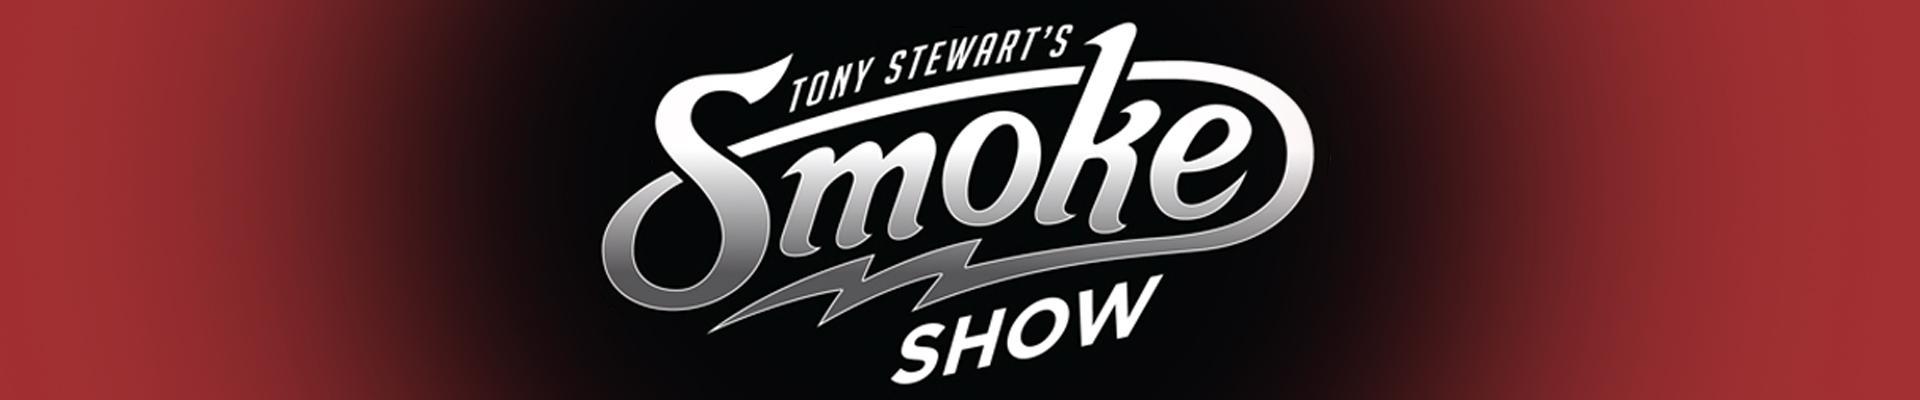 Tony Stewart Smoke Show Header